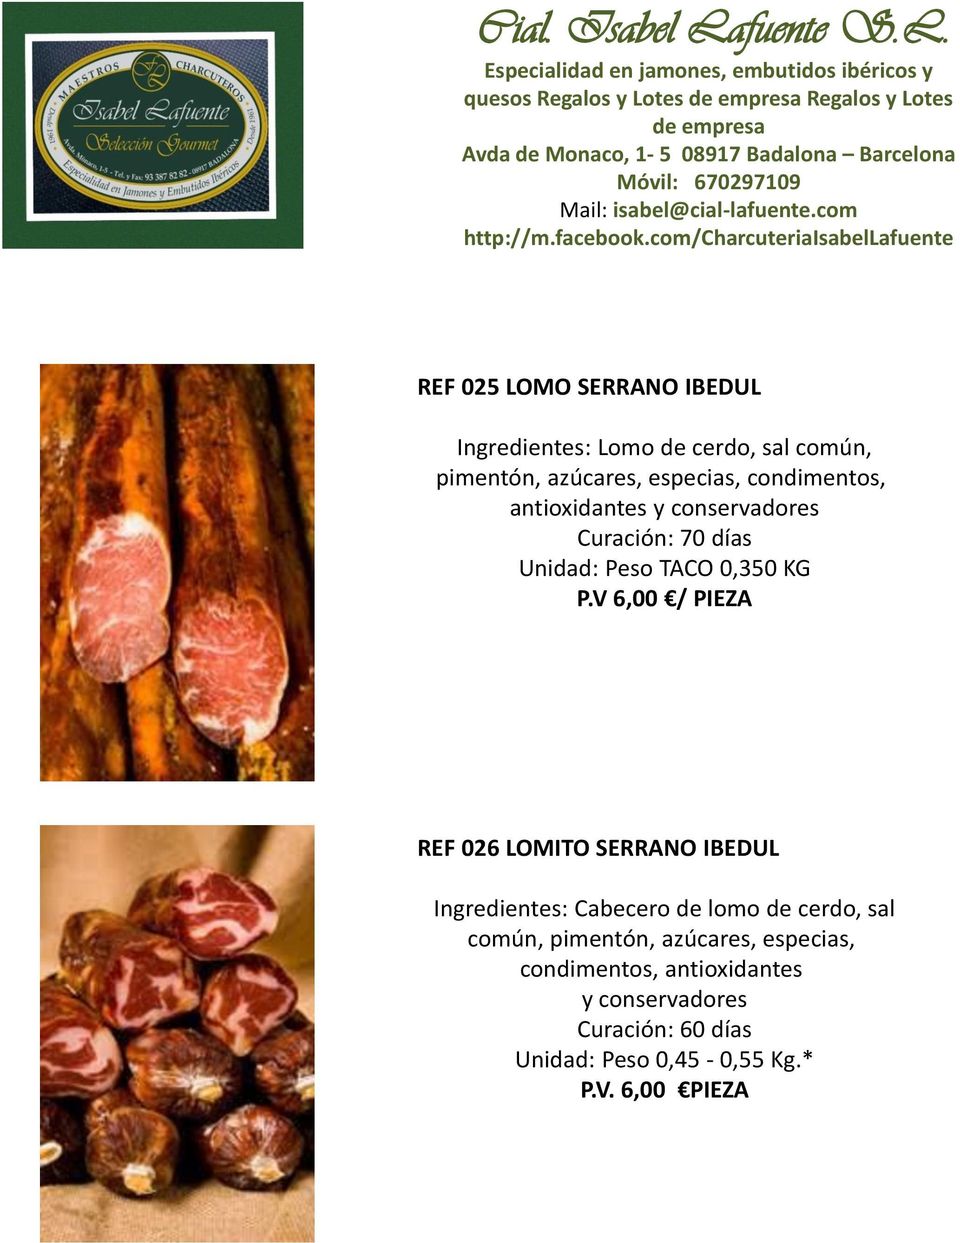 KG P.V 6,00 / PIEZA REF 026 LOMITO SERRANO IBEDUL Ingredientes: Cabecero de lomo de cerdo, sal común, pimentón,